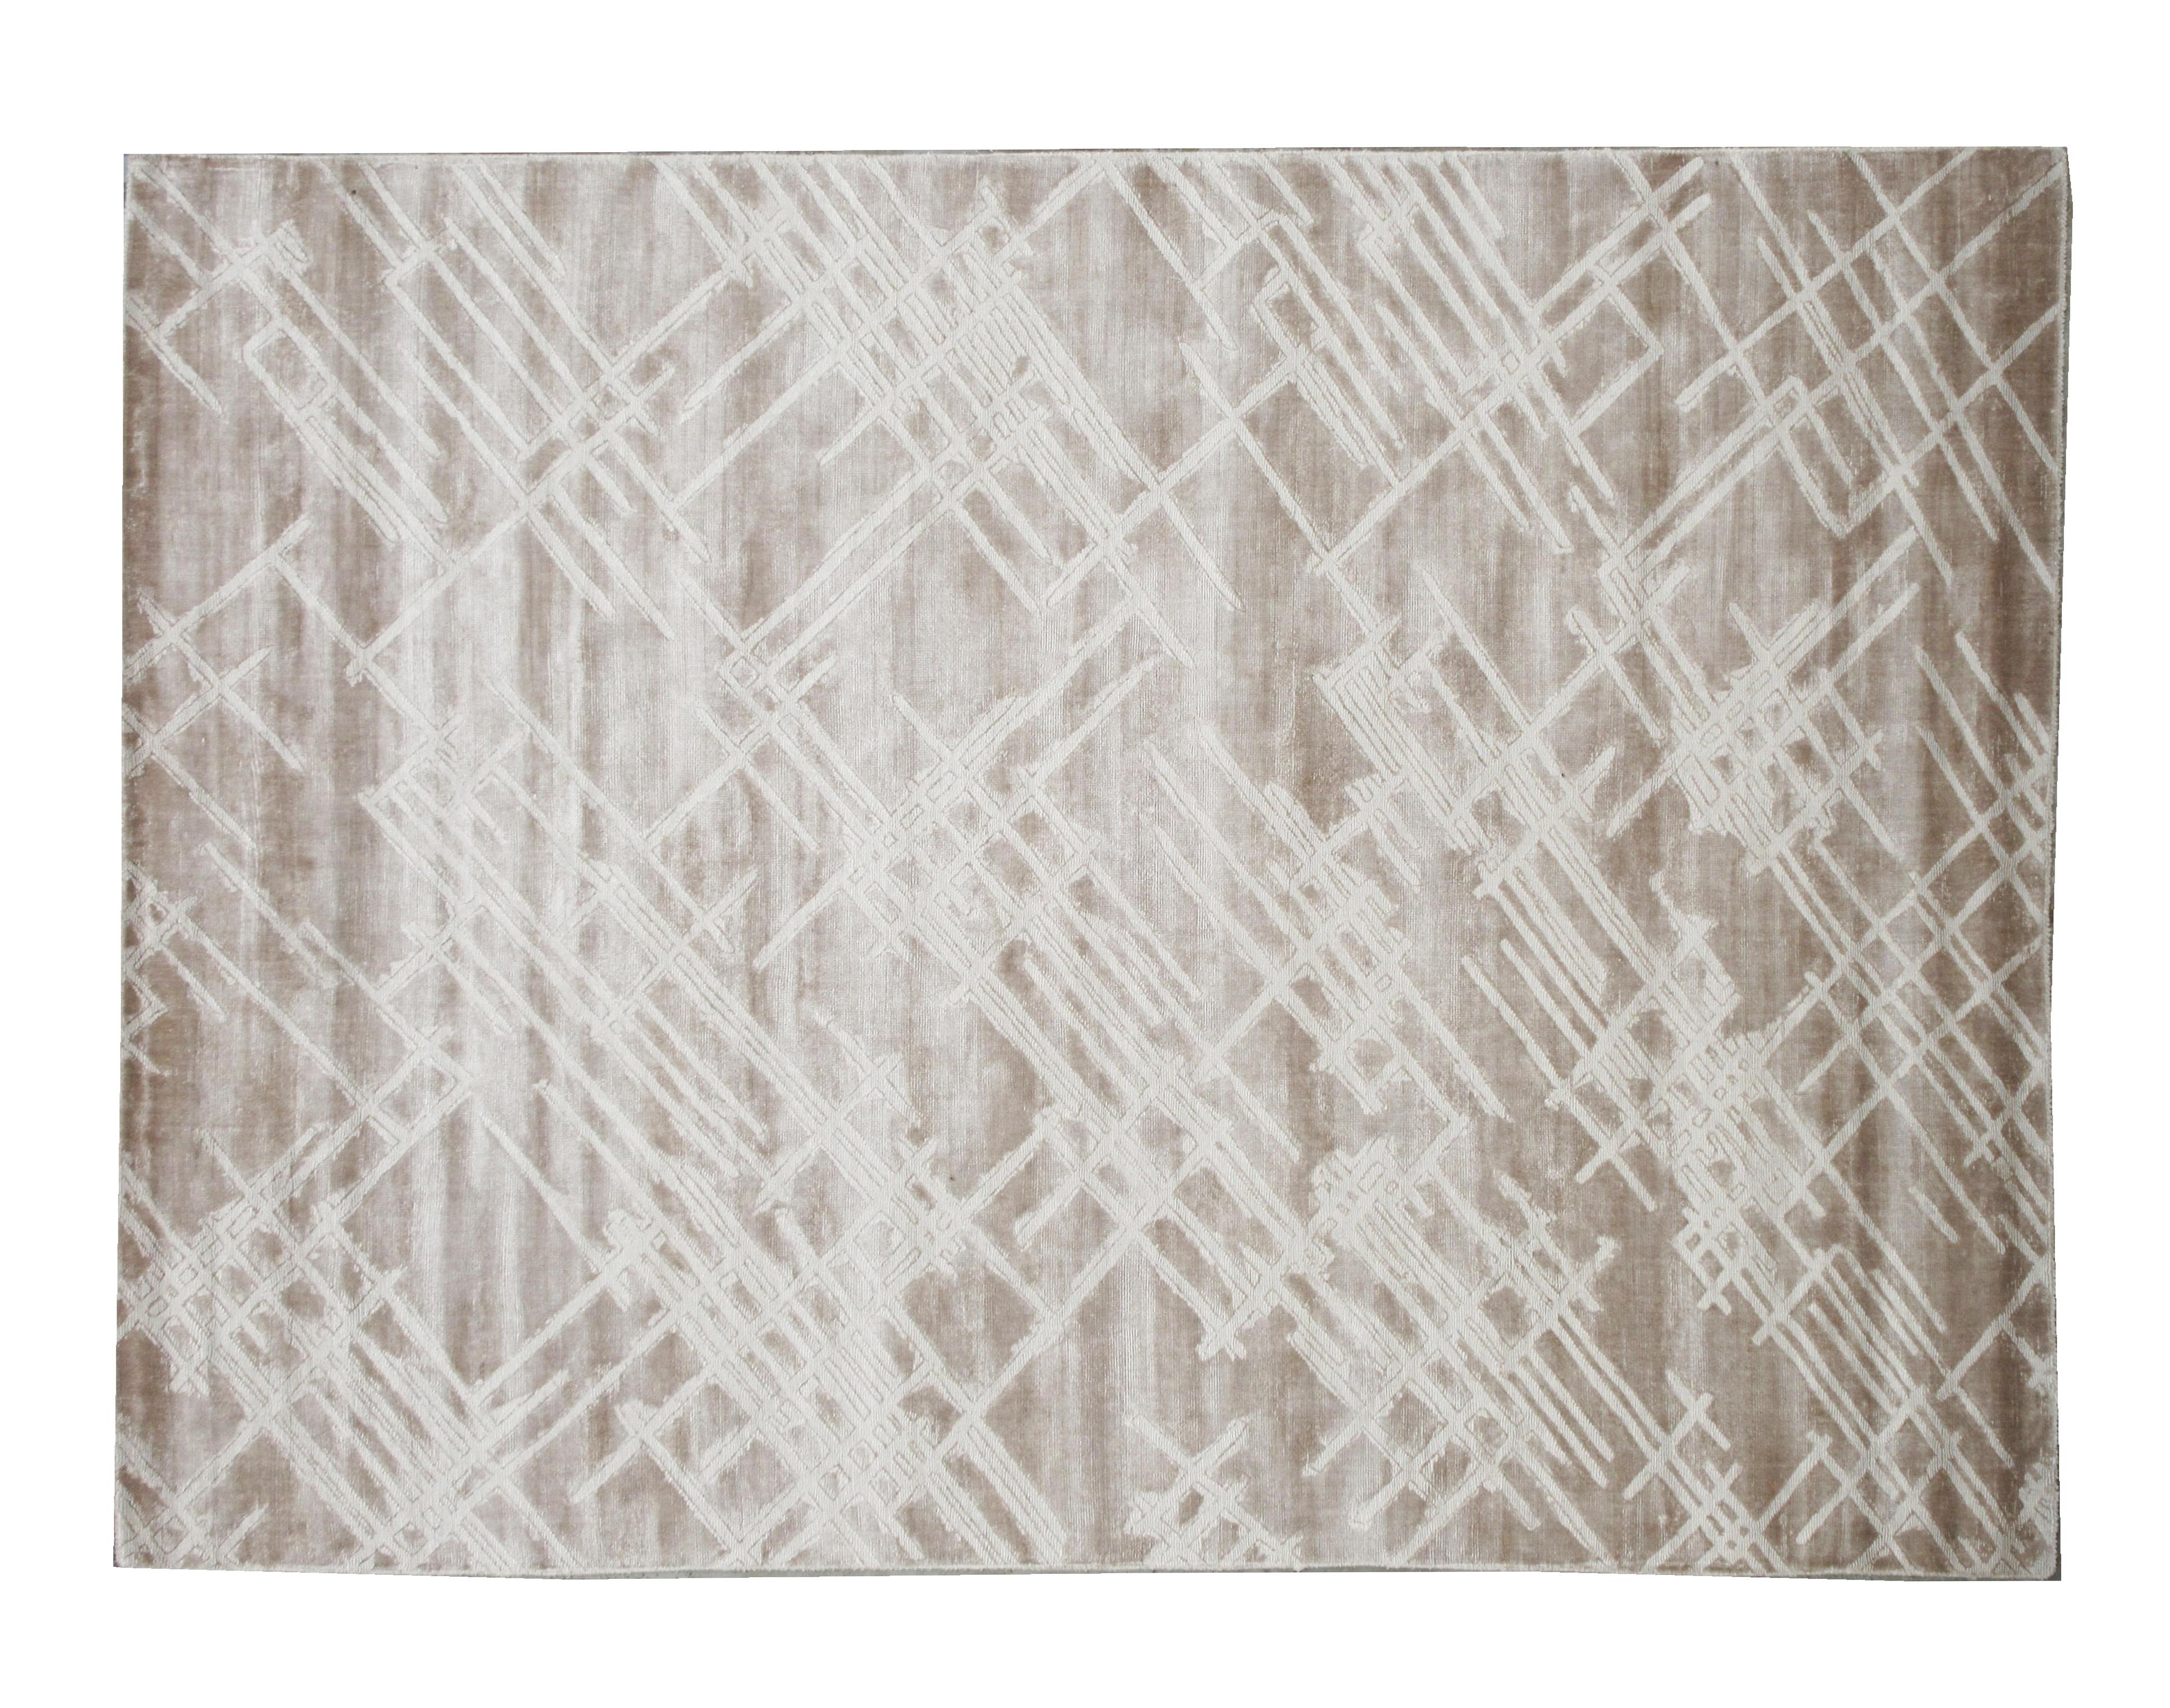 Handmade art silk pile on a cotton foundation.

Textured Design

Dimensions: 8'11